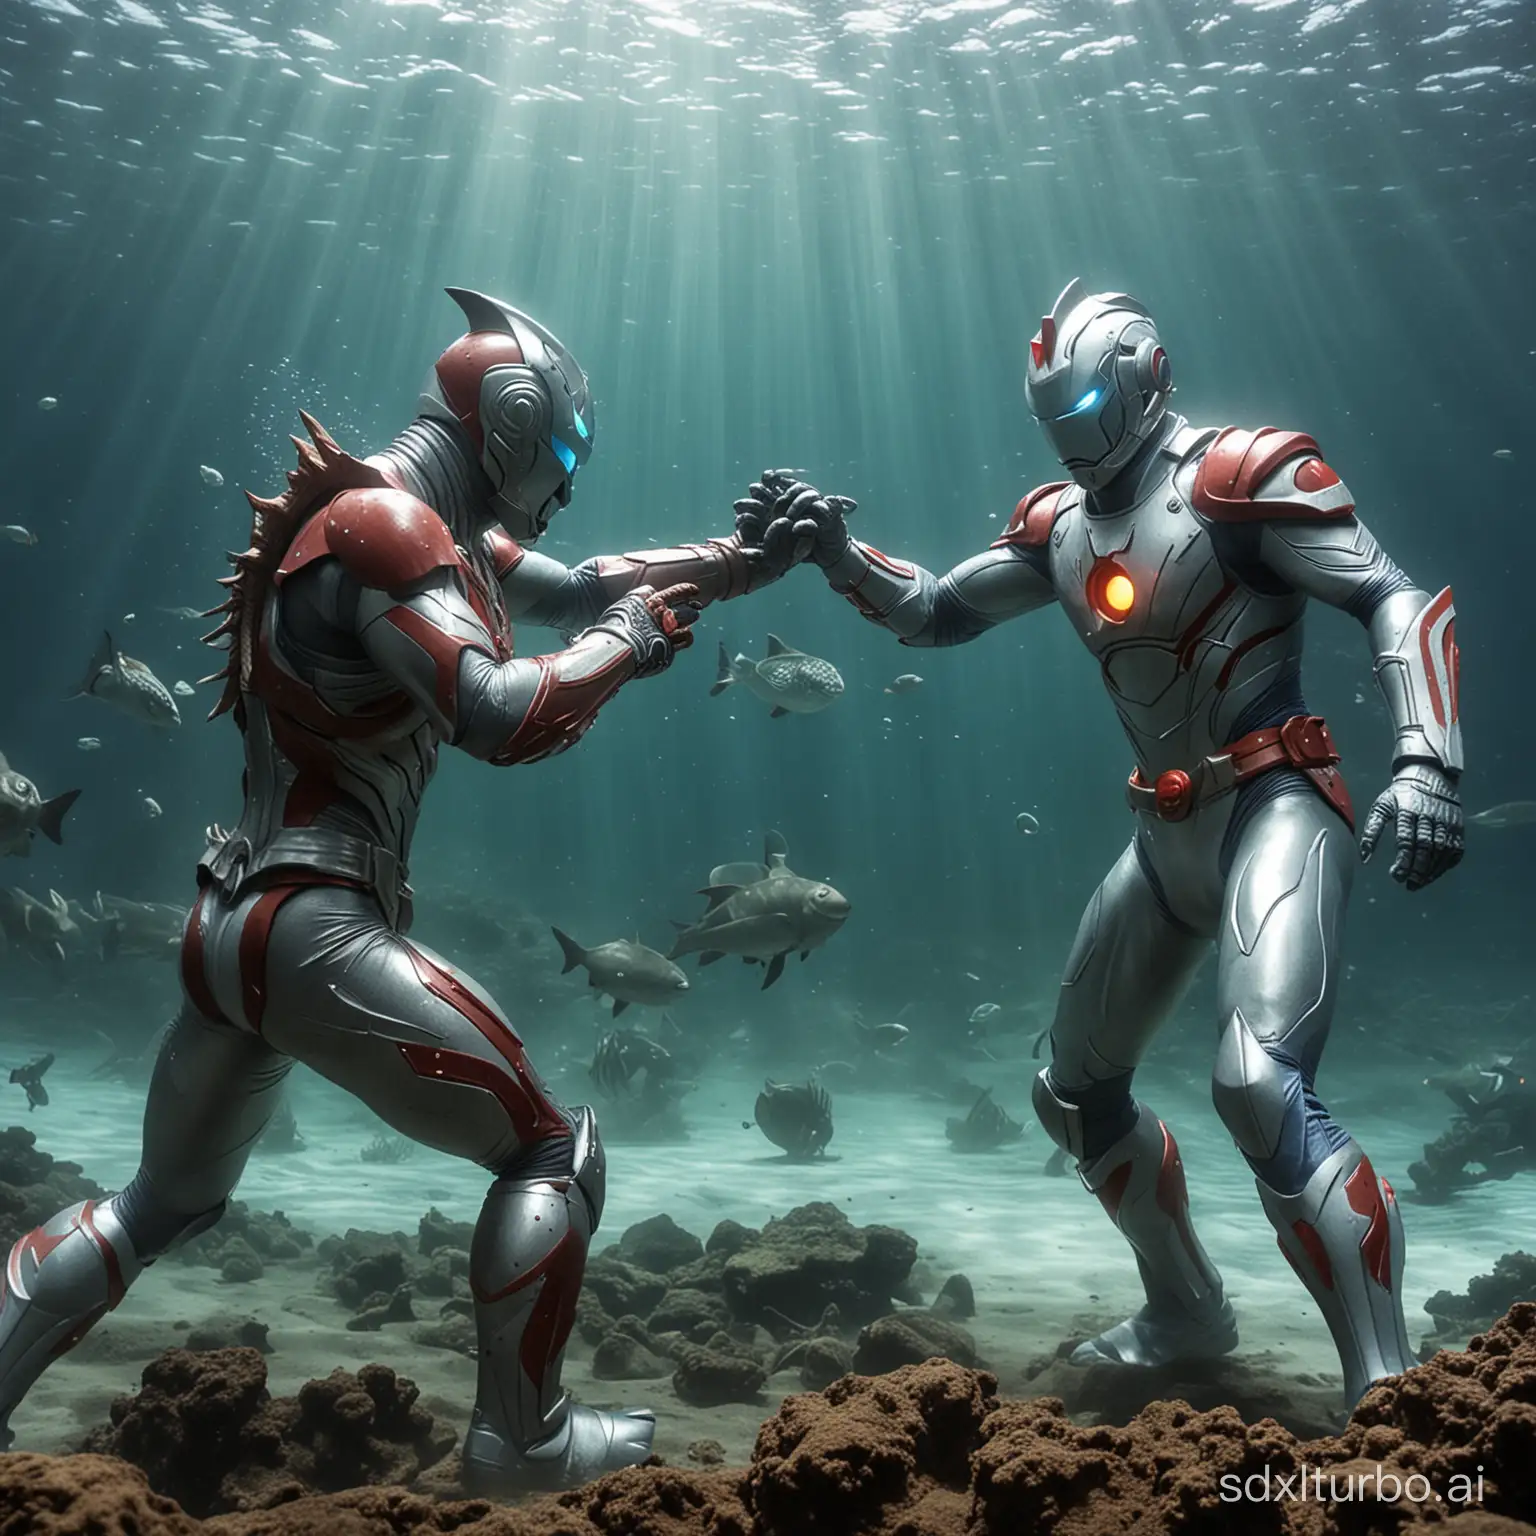 Under the sea, Ultraman and Ledi fight